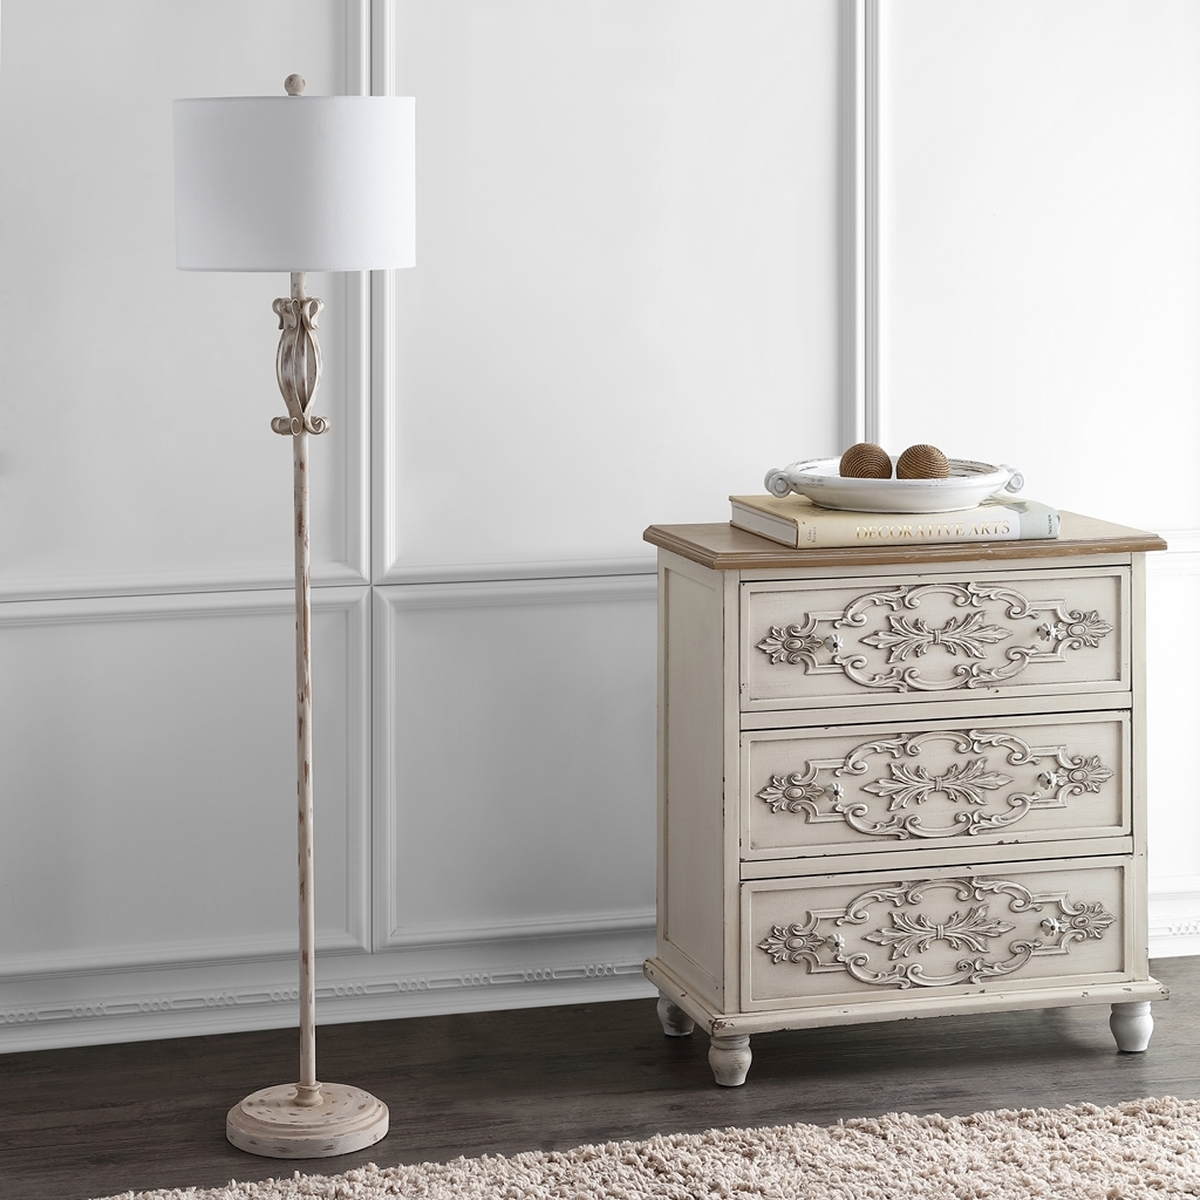 Philippa Floor Lamp - White Washed - Arlo Home - Image 2